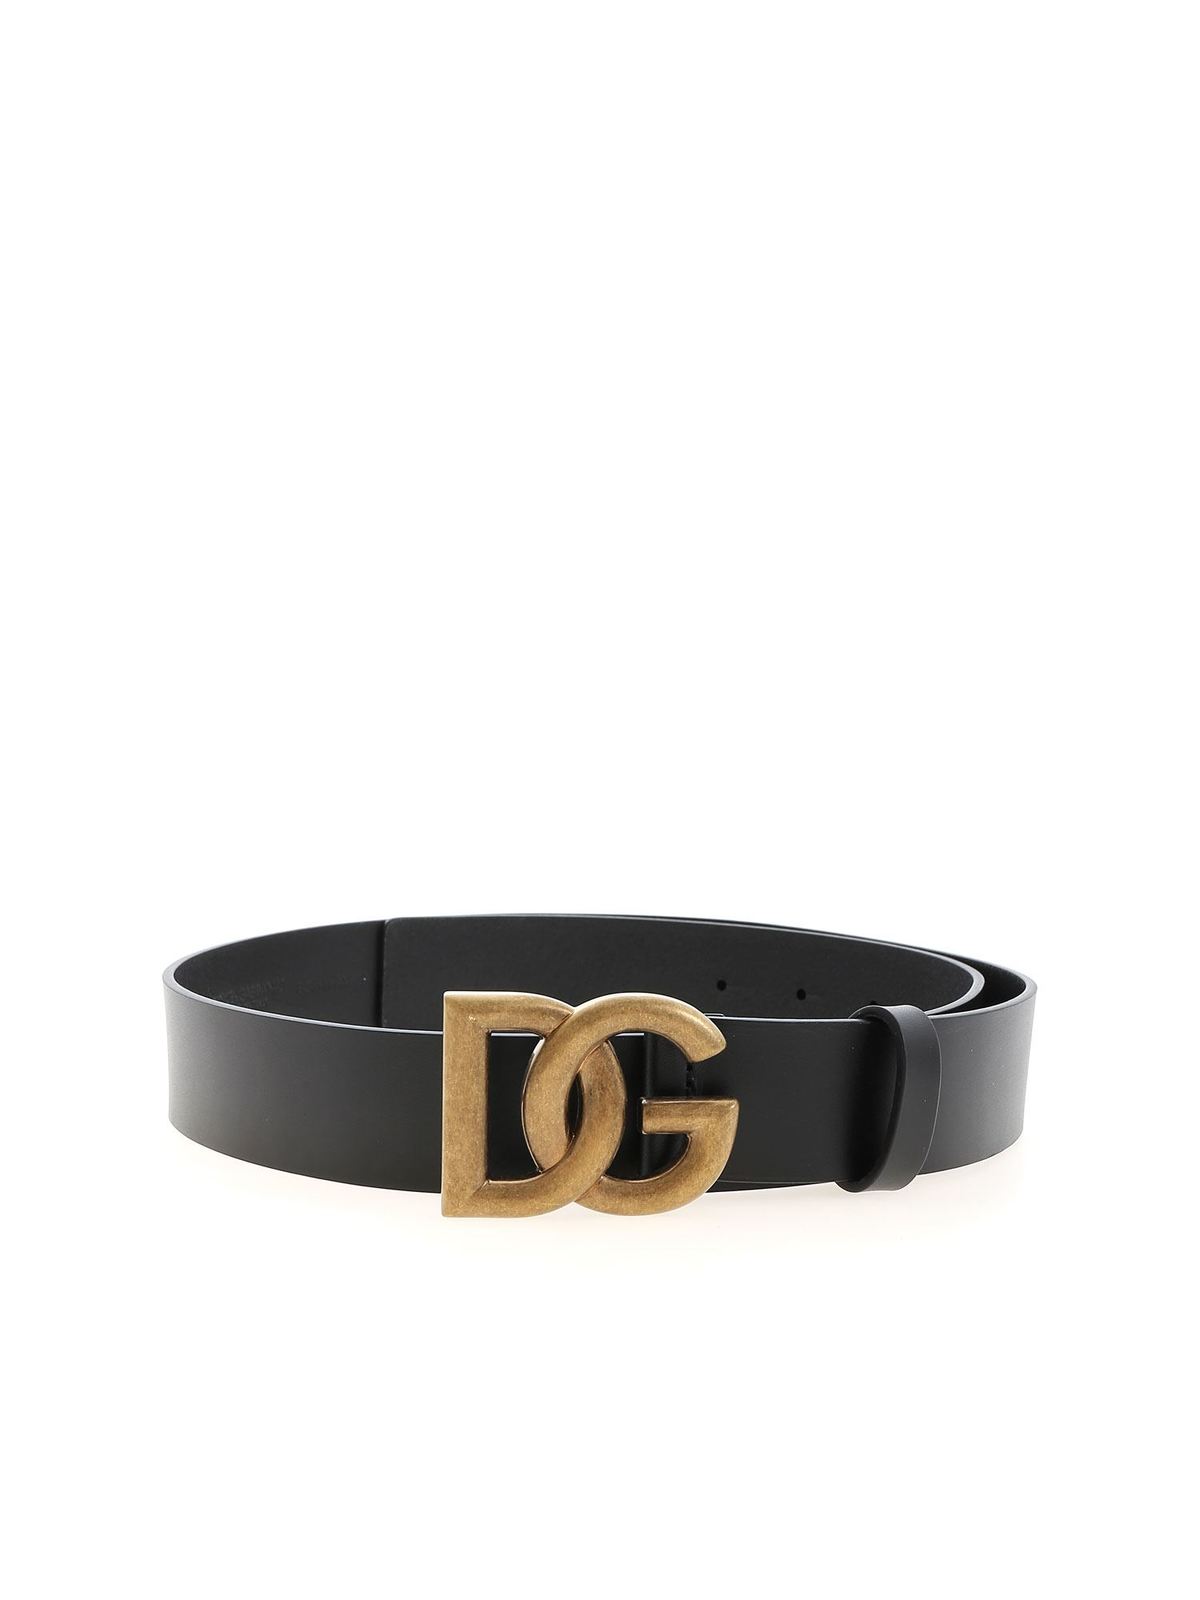 Dolce & Gabbana Branded Buckle Belt In Black